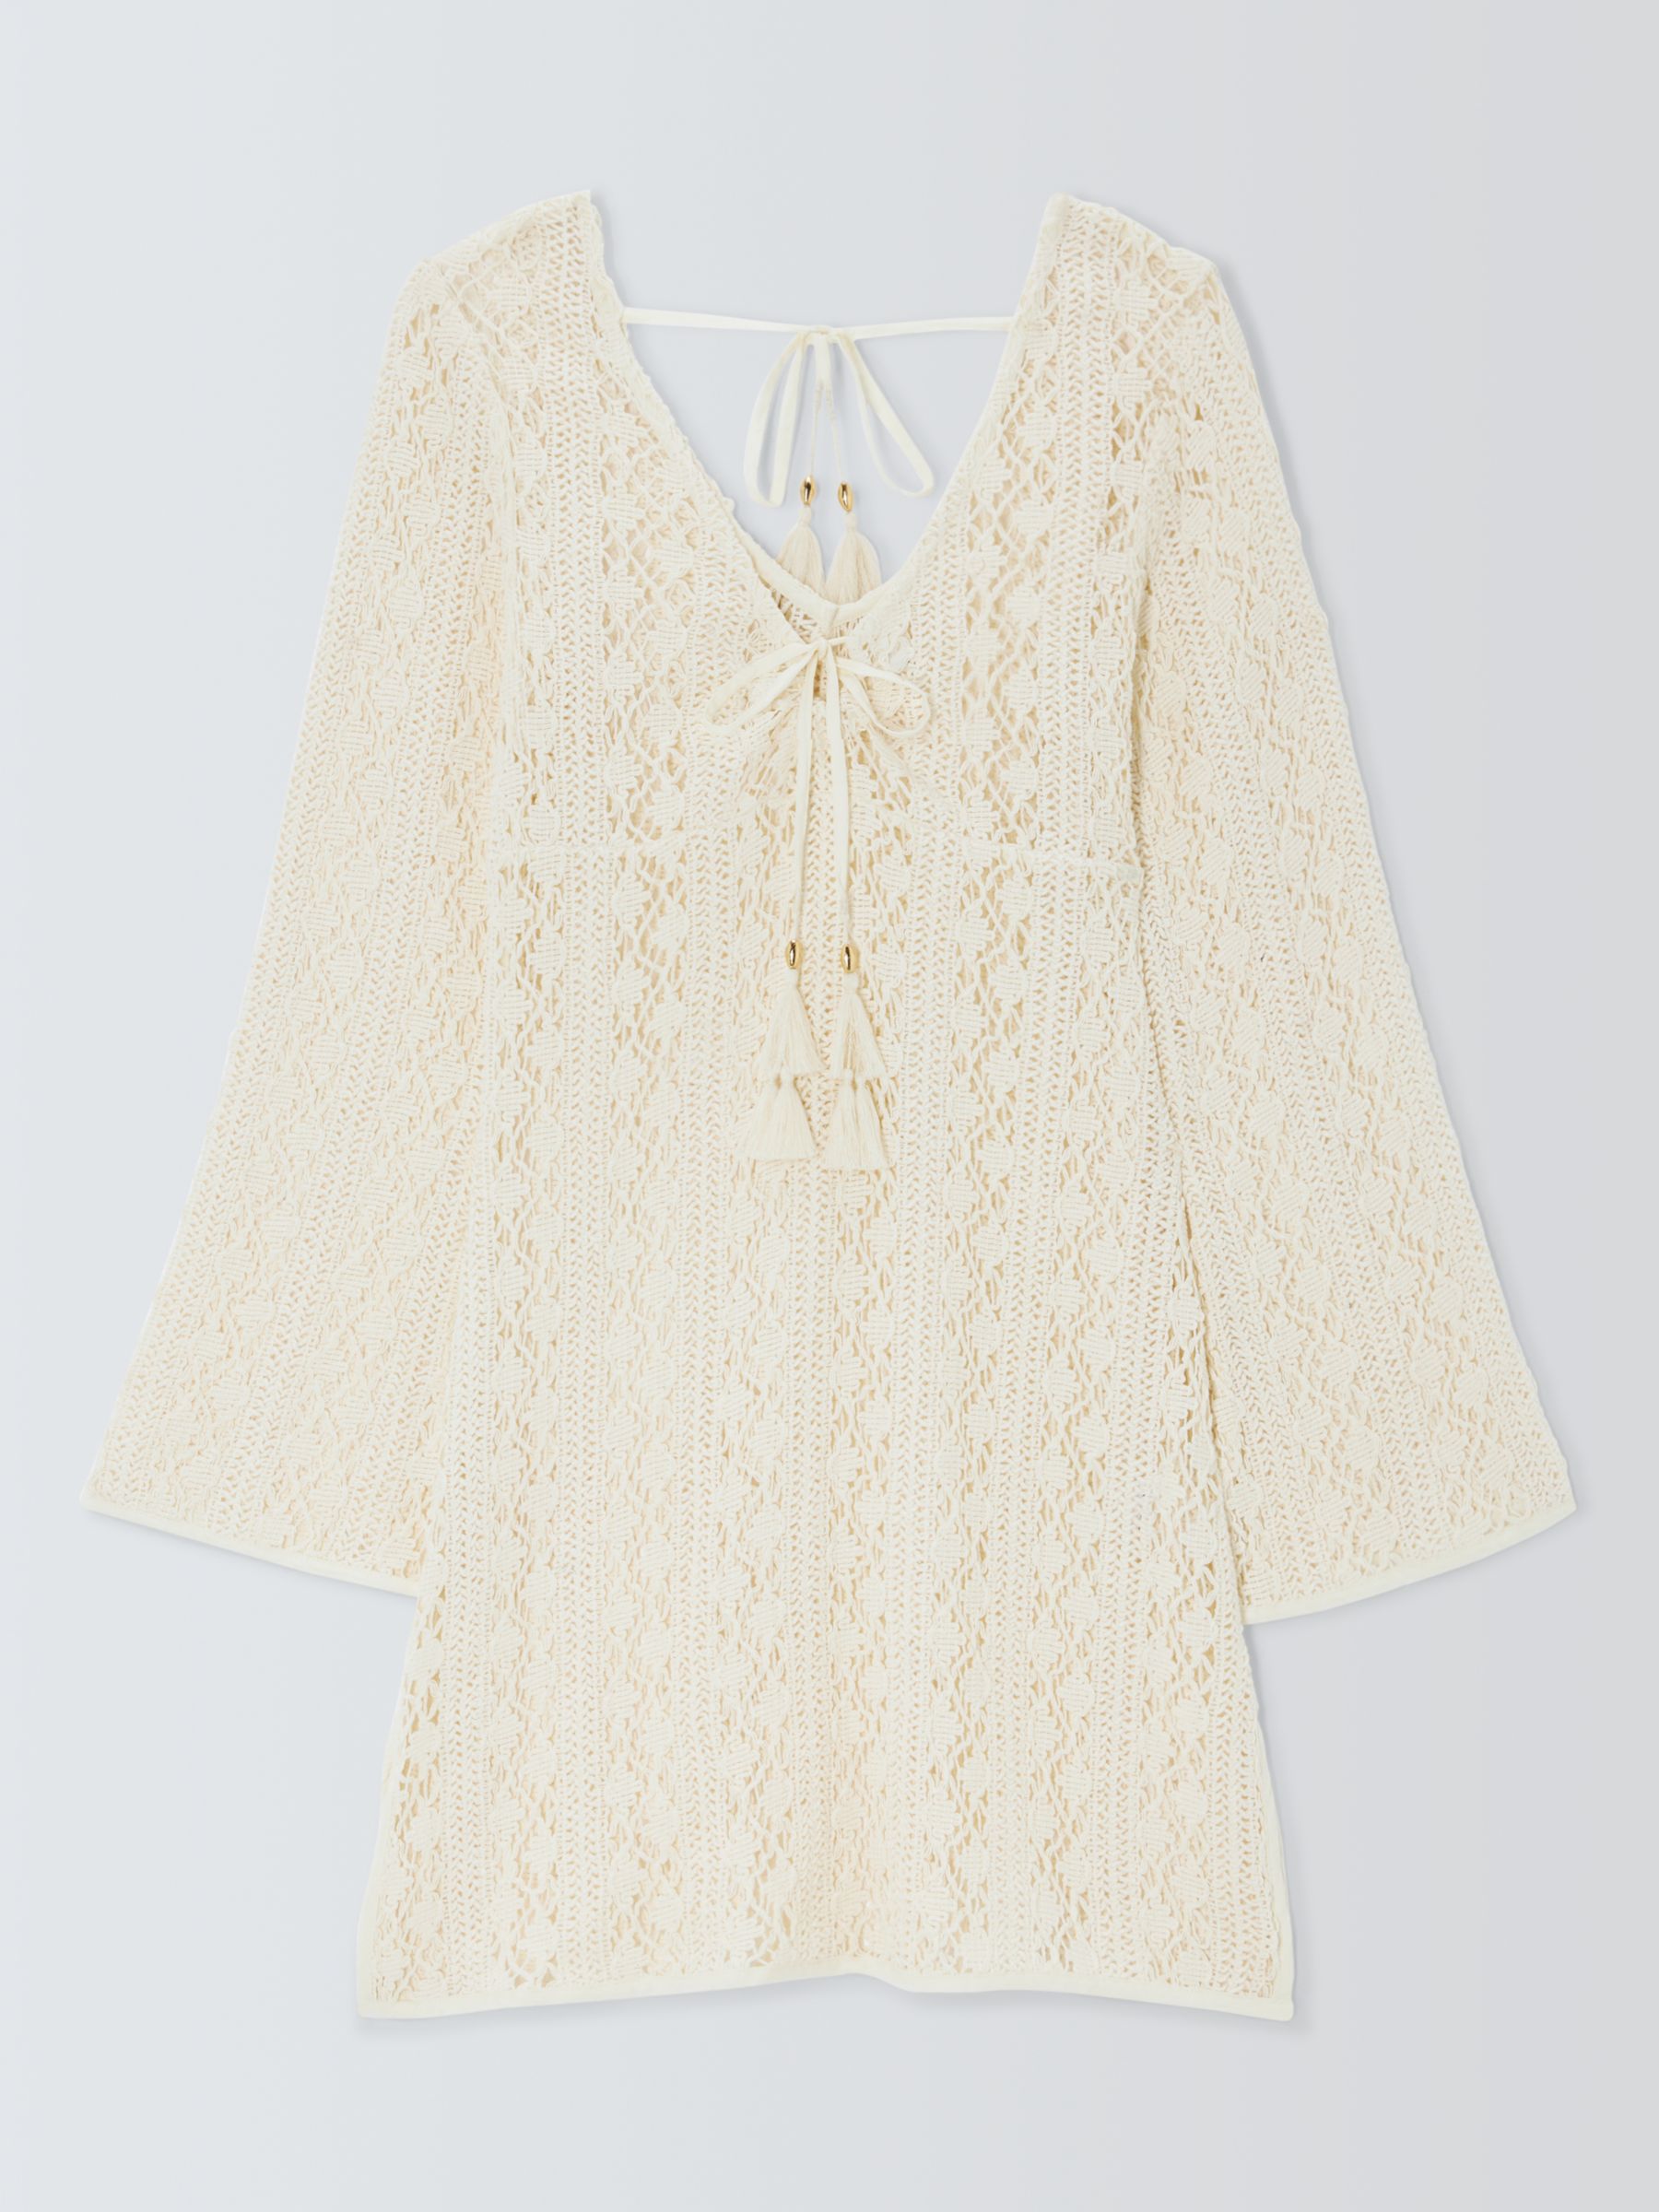 AND/OR Capri Crochet Mini Beach Dress, Cream, M